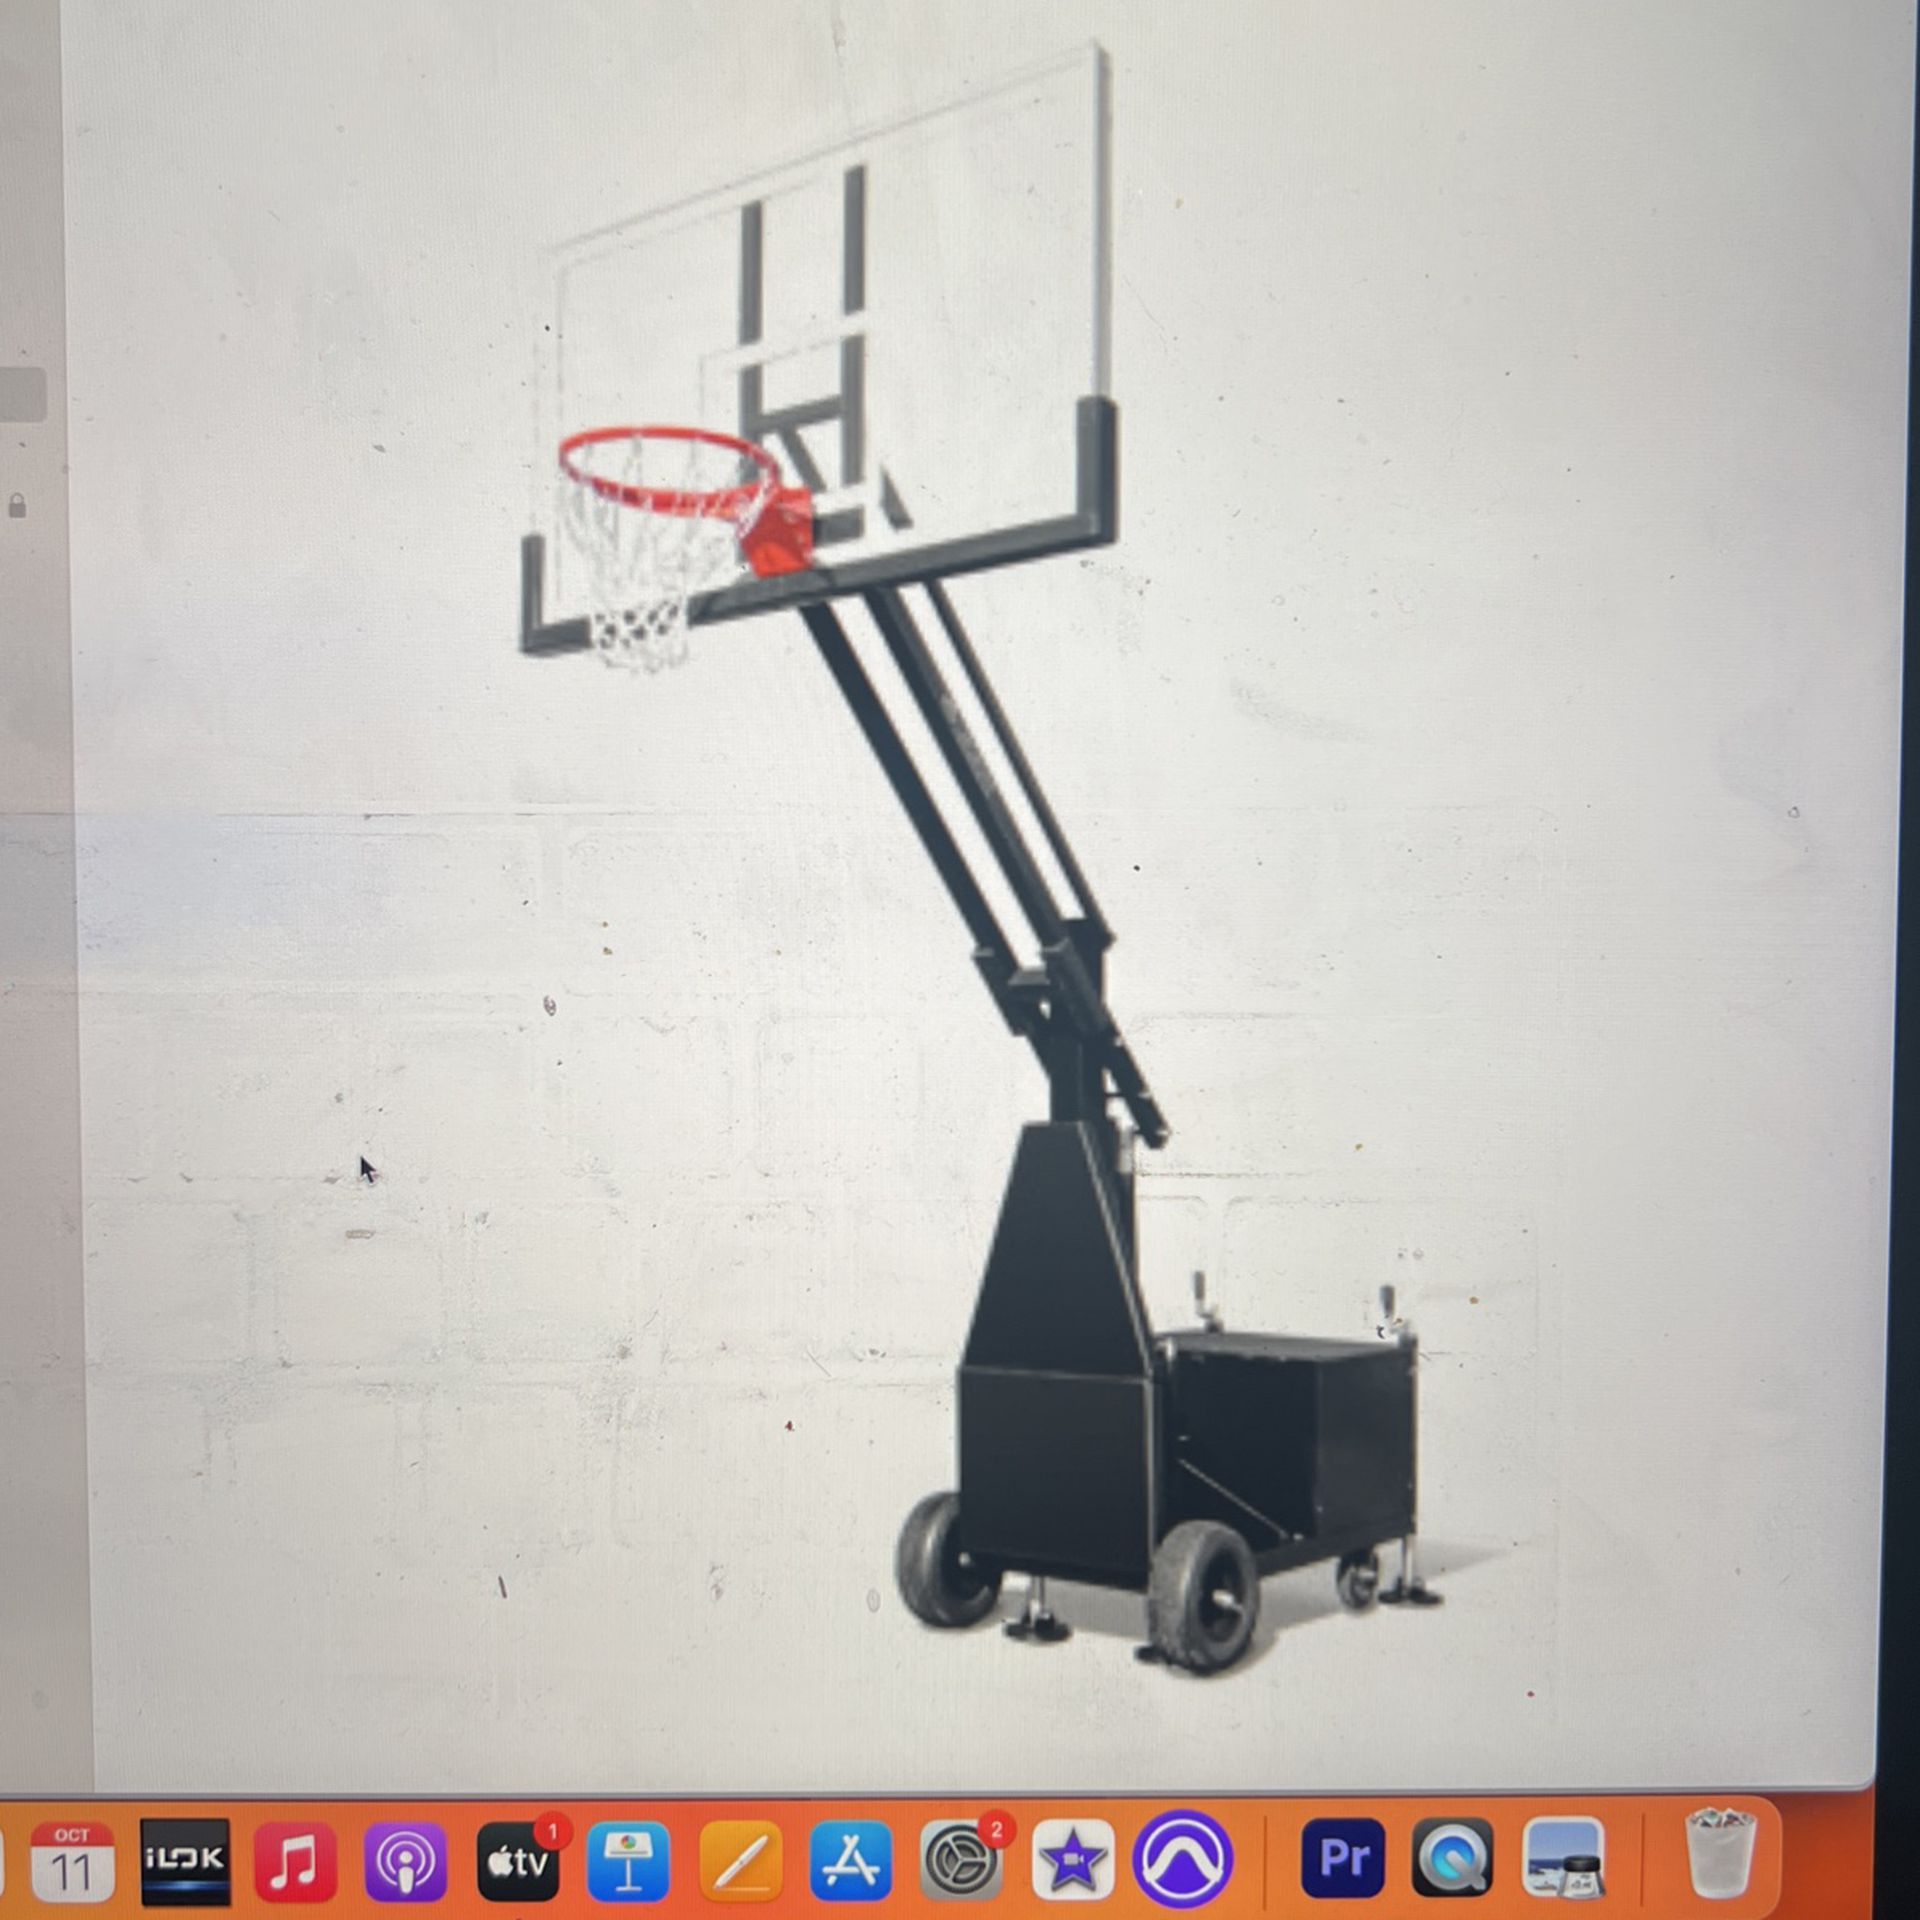 Basketball Hoop For sale!